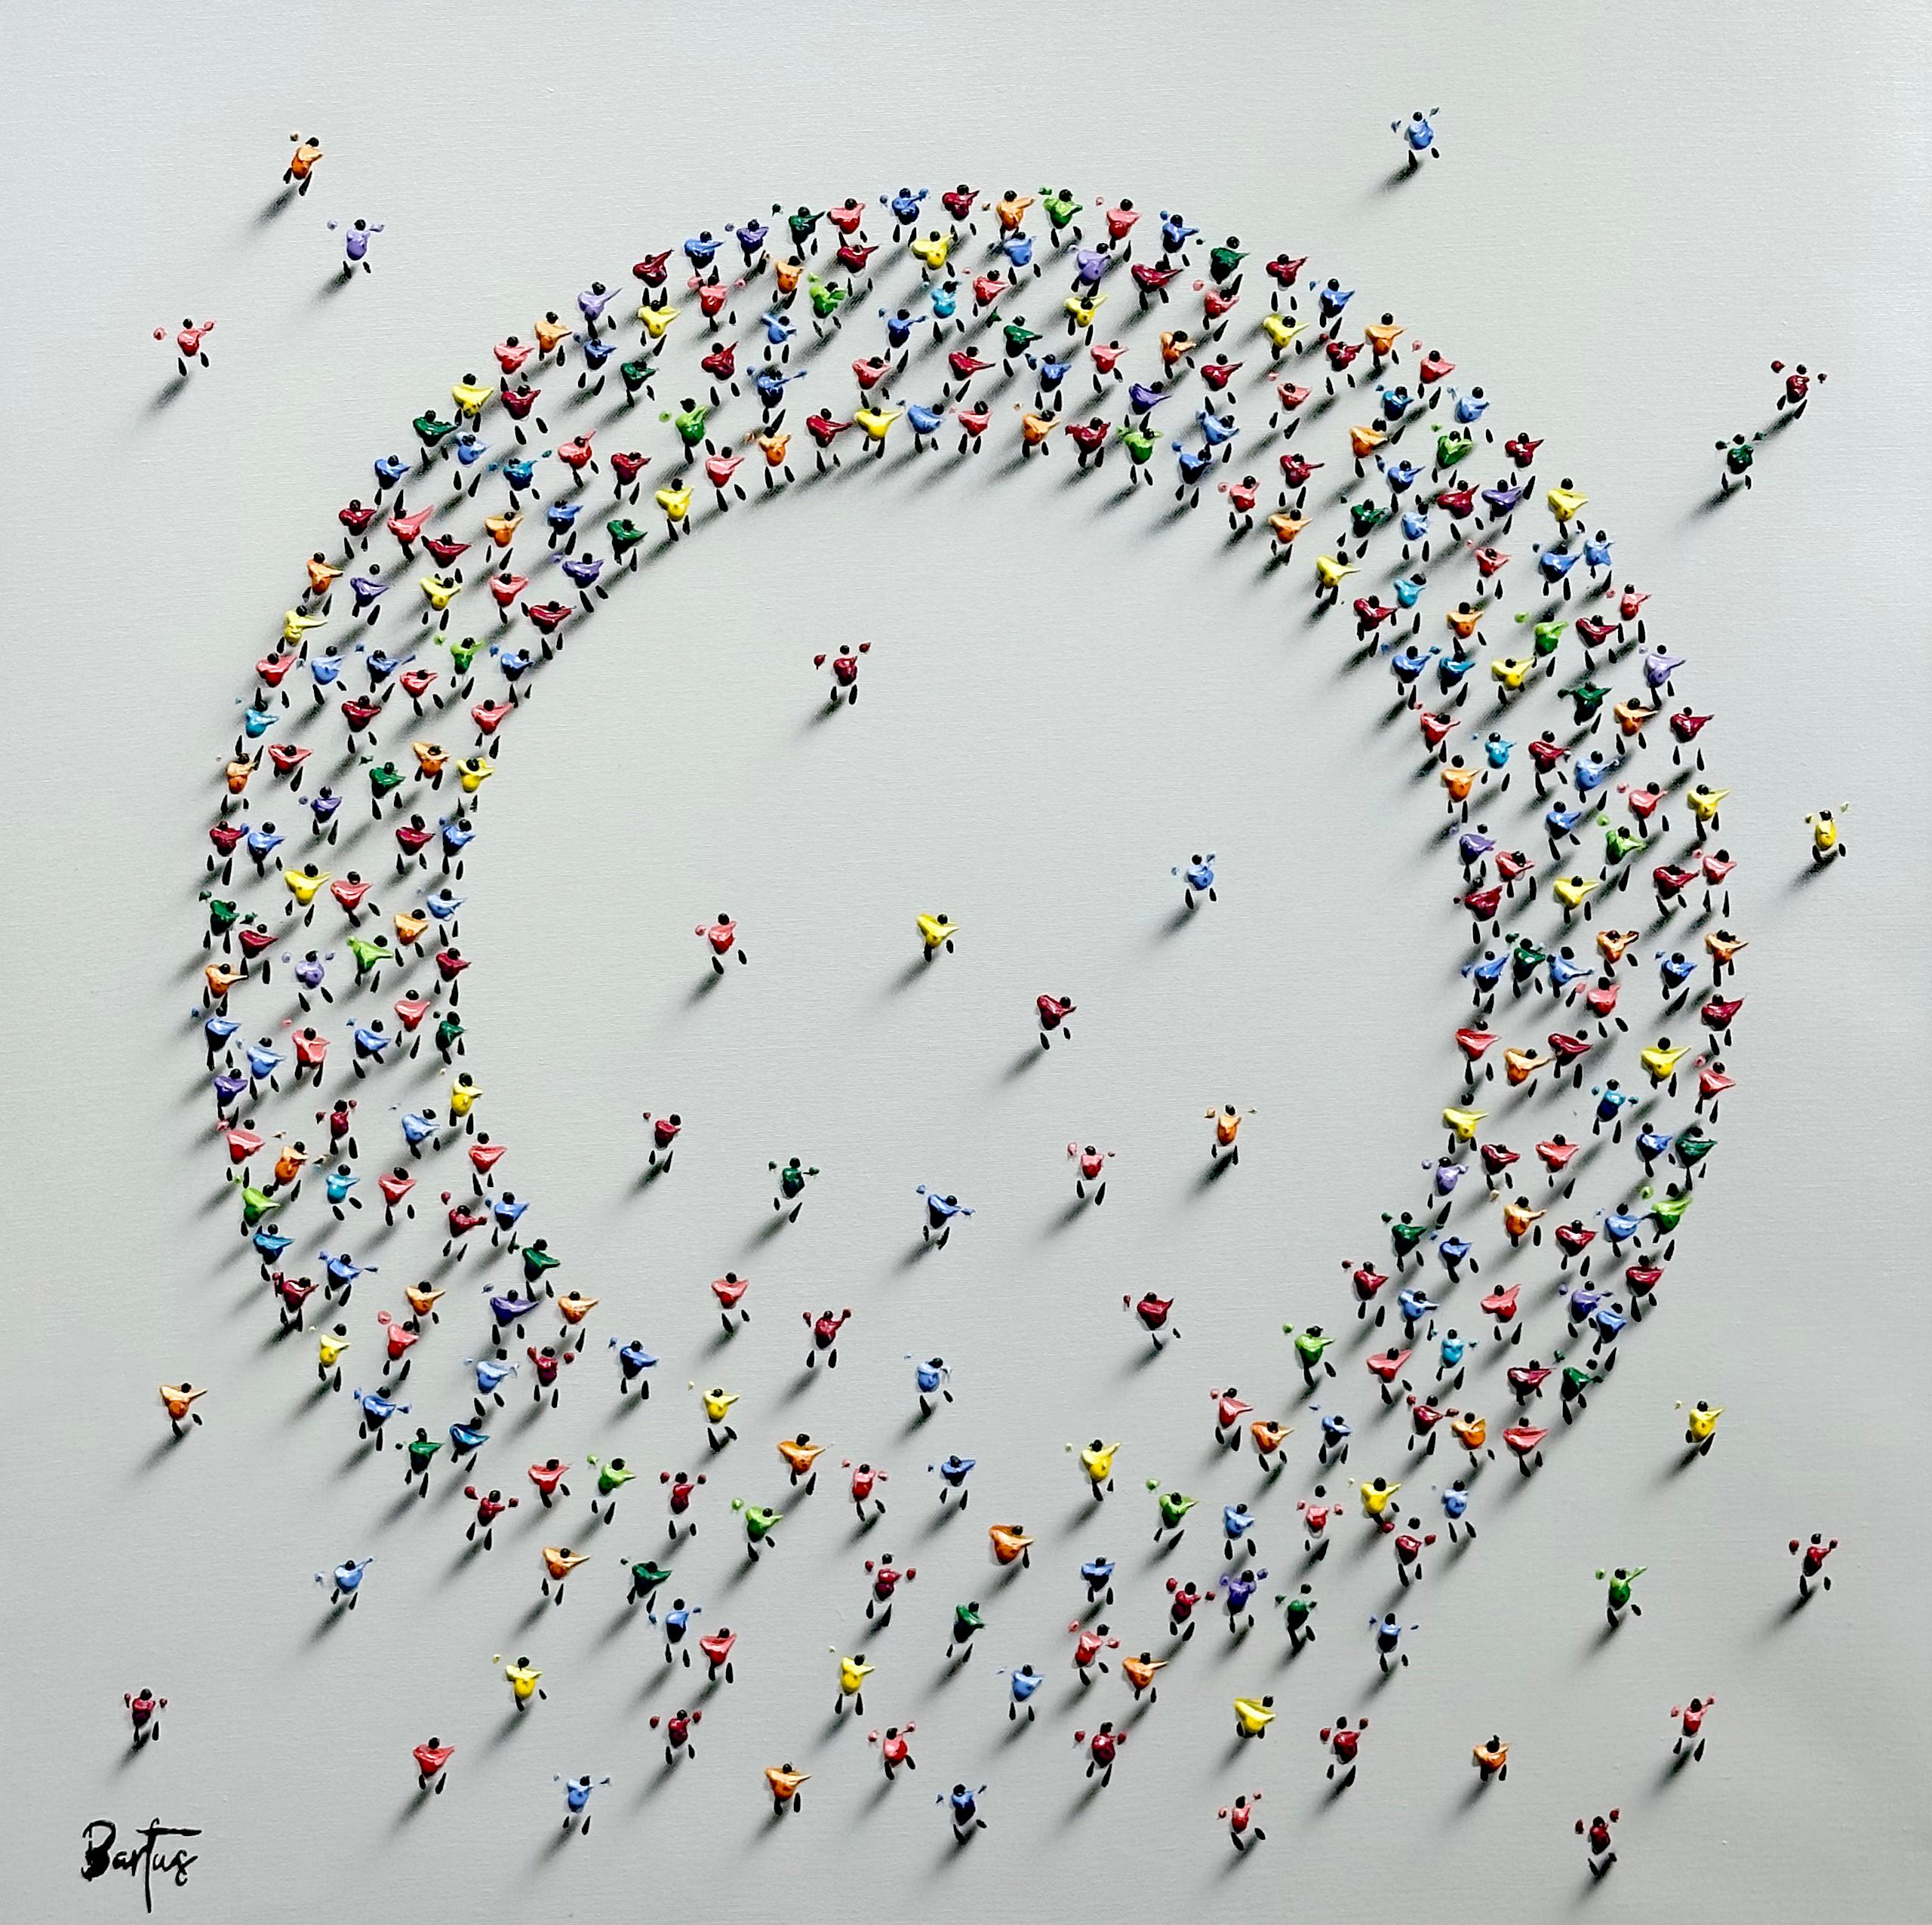 Francisco Bartus, "Open Circle", 31 x 31, Textured Figure Mixed Media Painting 